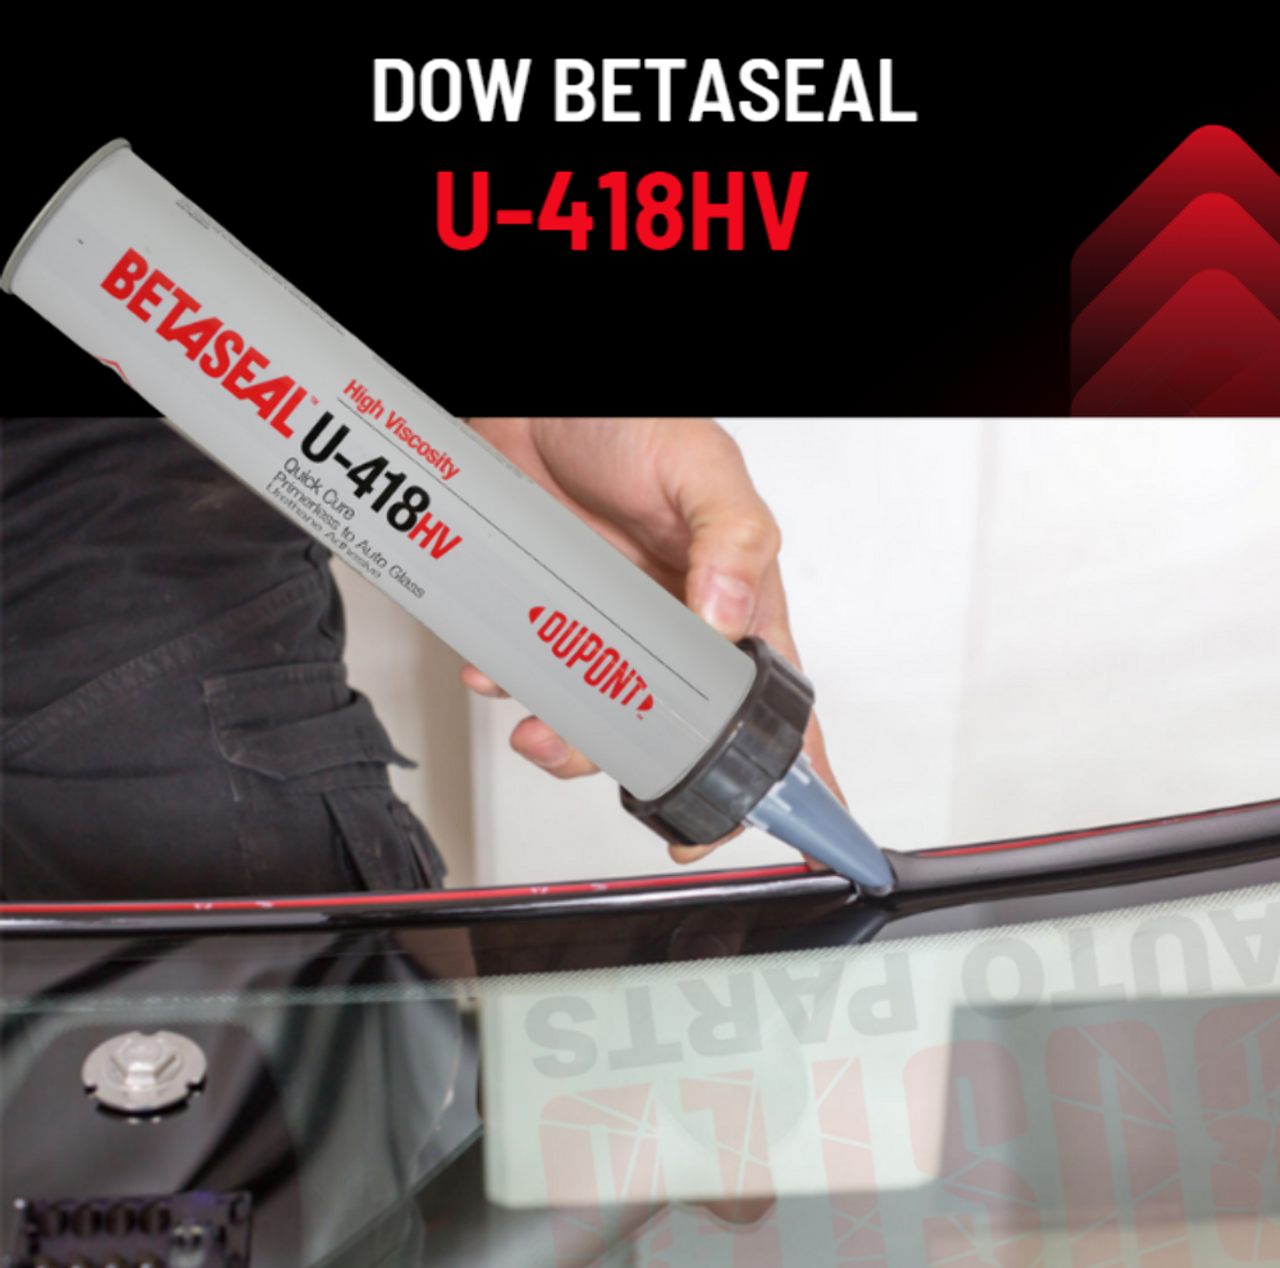 Dow Betaseal Auto Glass High Viscosity Urethane, Adhesive, Sealant - Primerless U-418HV 2 Tubes